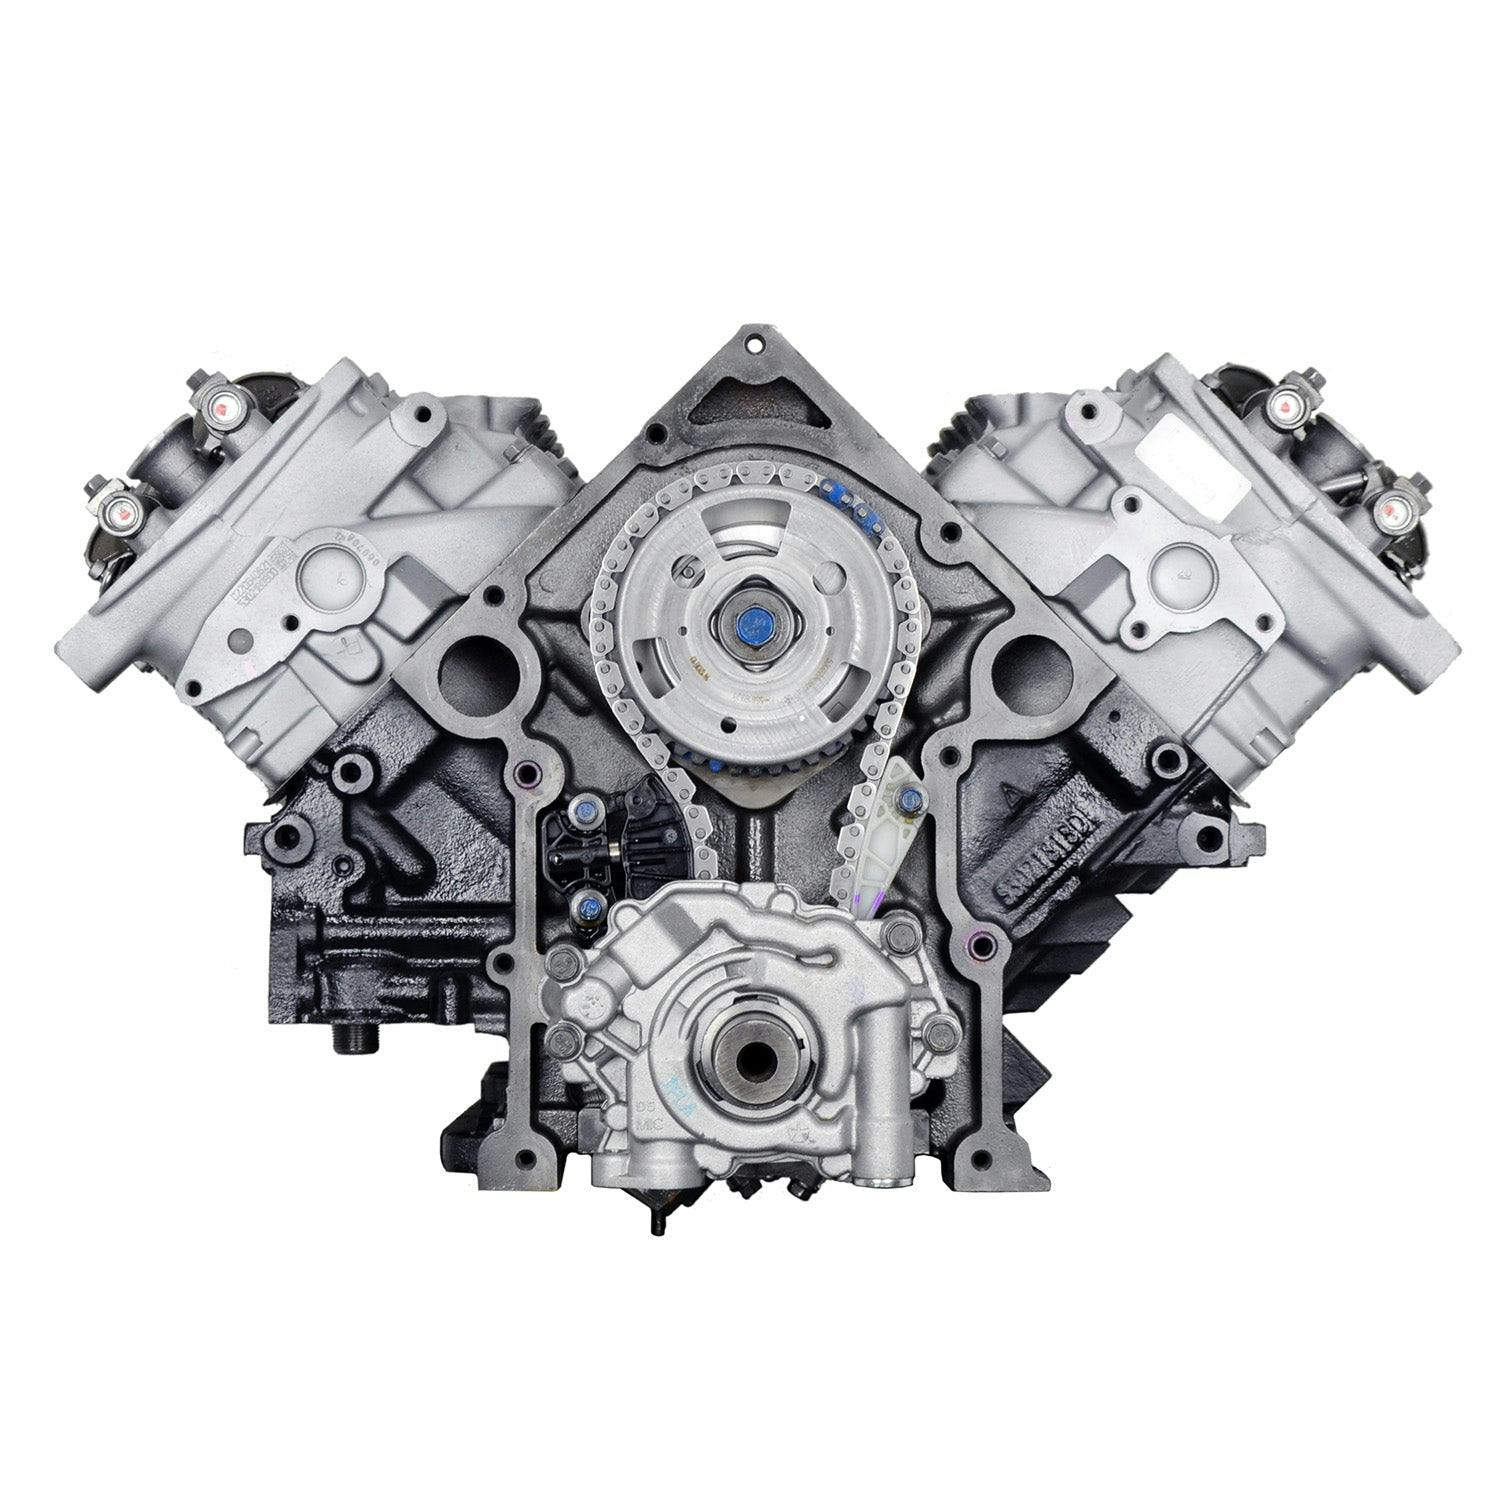 5.7L V8 Engine for 2009-2012 Dodge Ram 2500, Ram 3500/Ram 2500, 3500